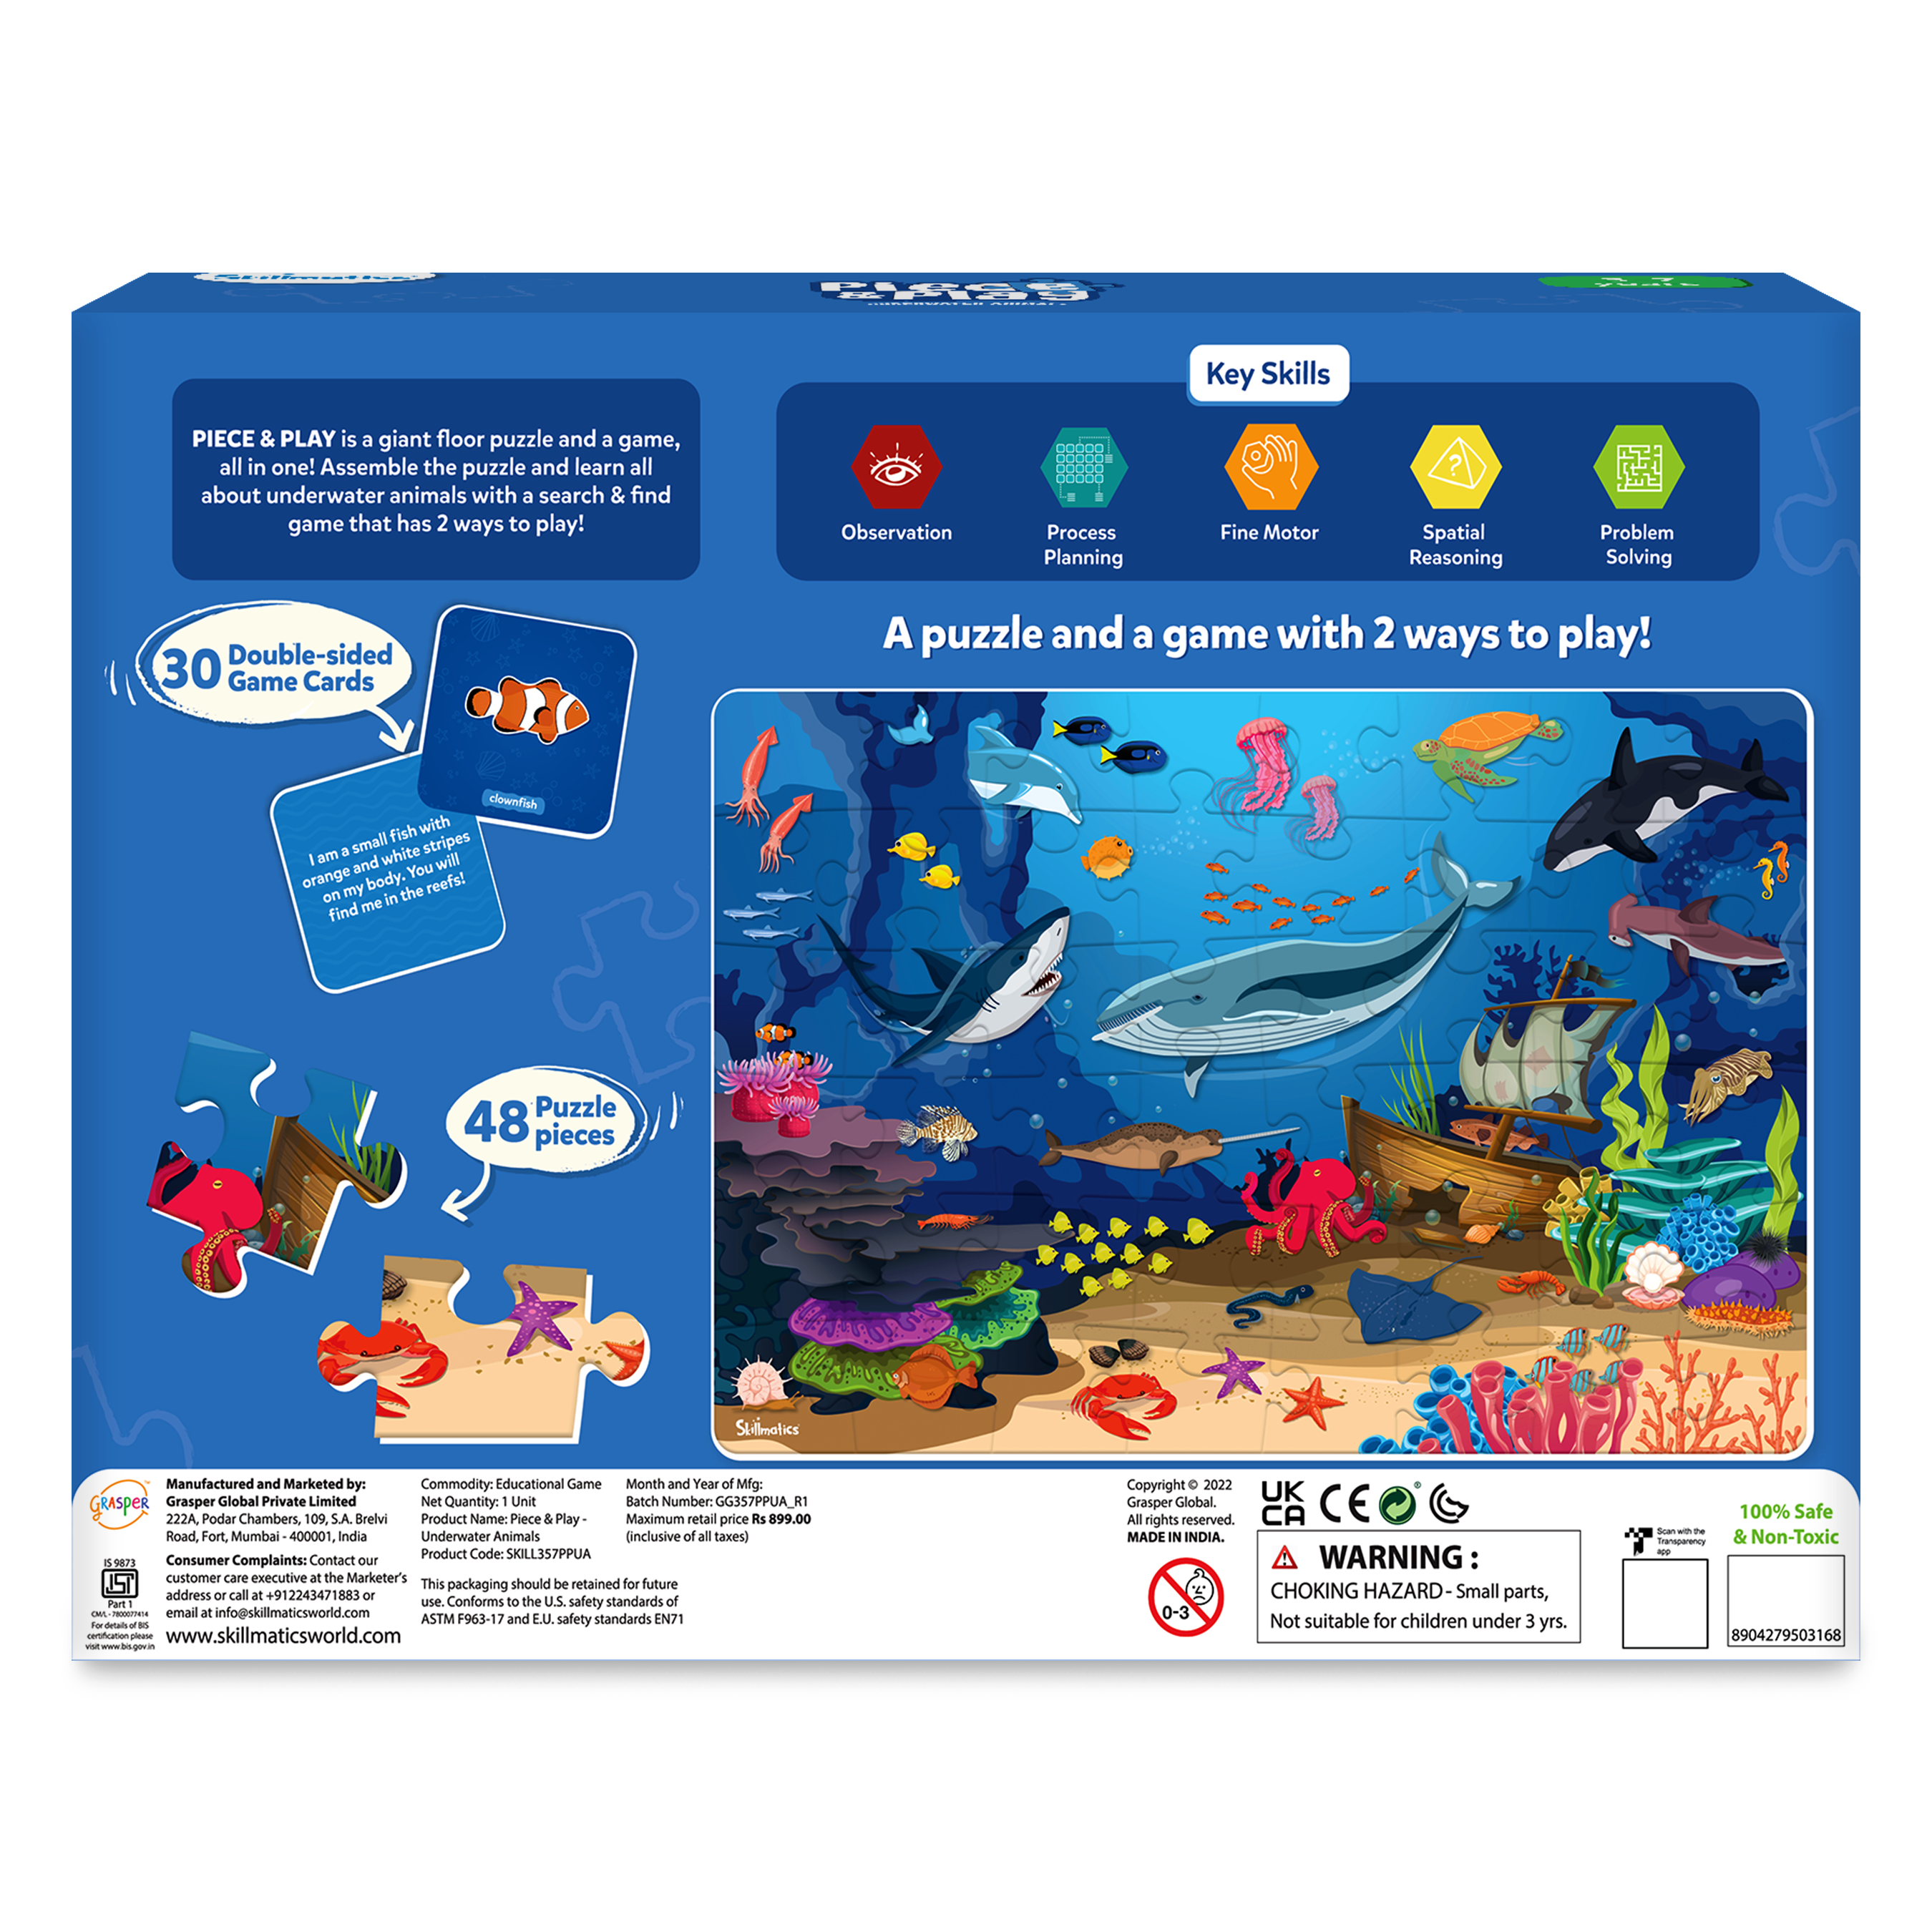 Piece & Play - Underwater Animals | Fun & Educational 48 Piece Jigsaw Puzzle